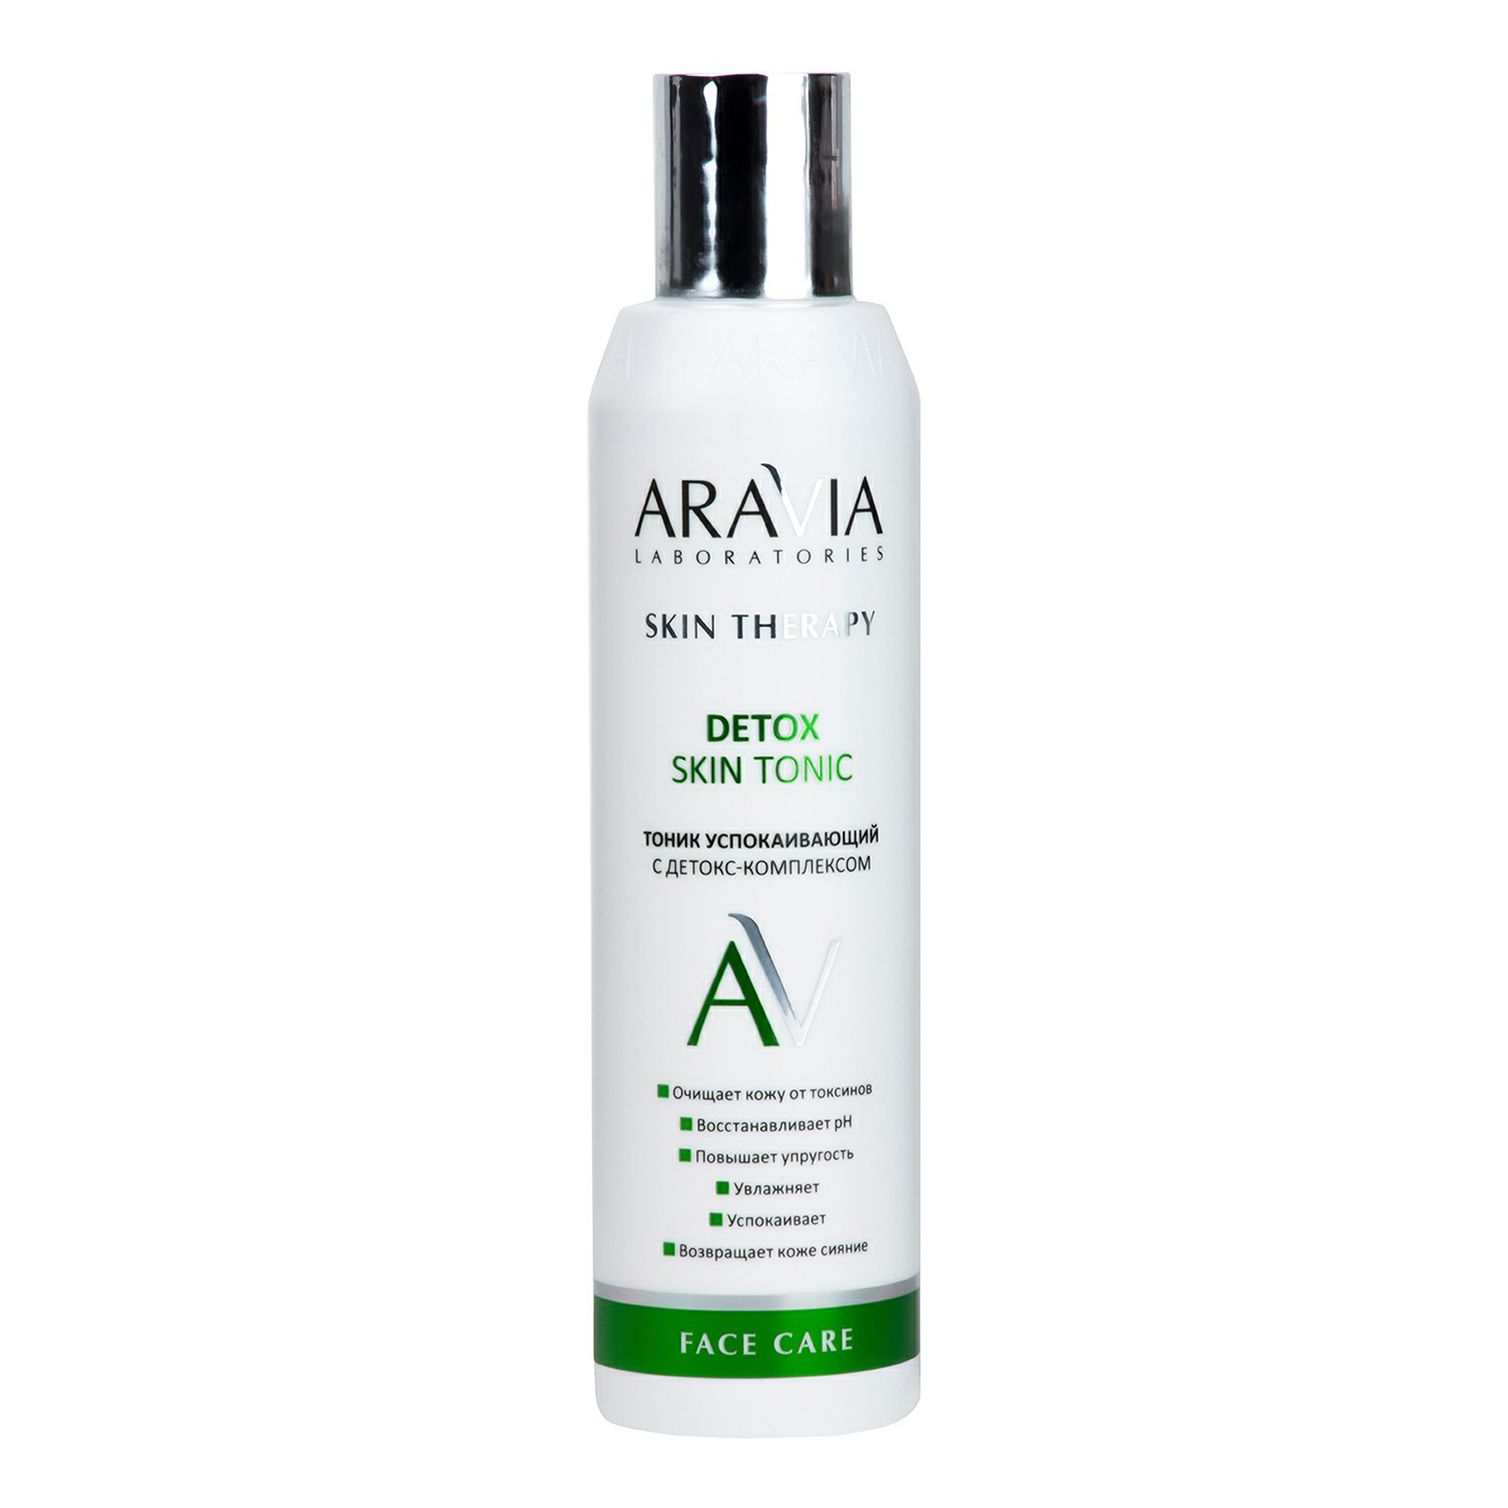 Тоник для лица Aravia Laboratories Skin Therapy Detox Skin Tonic успокаивающий 200 мл